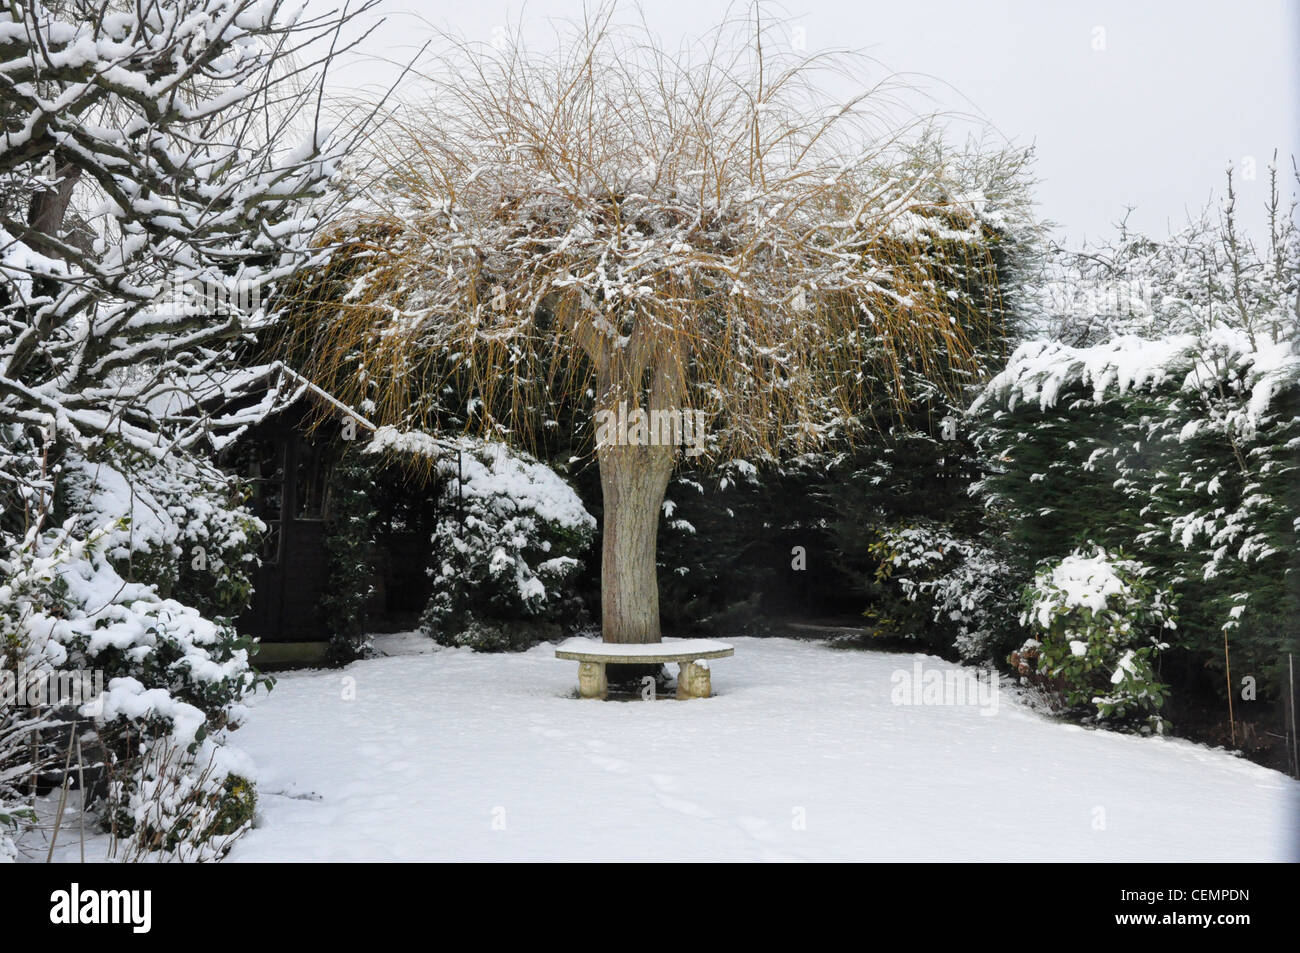 Hiver neige scène jardin Banque D'Images